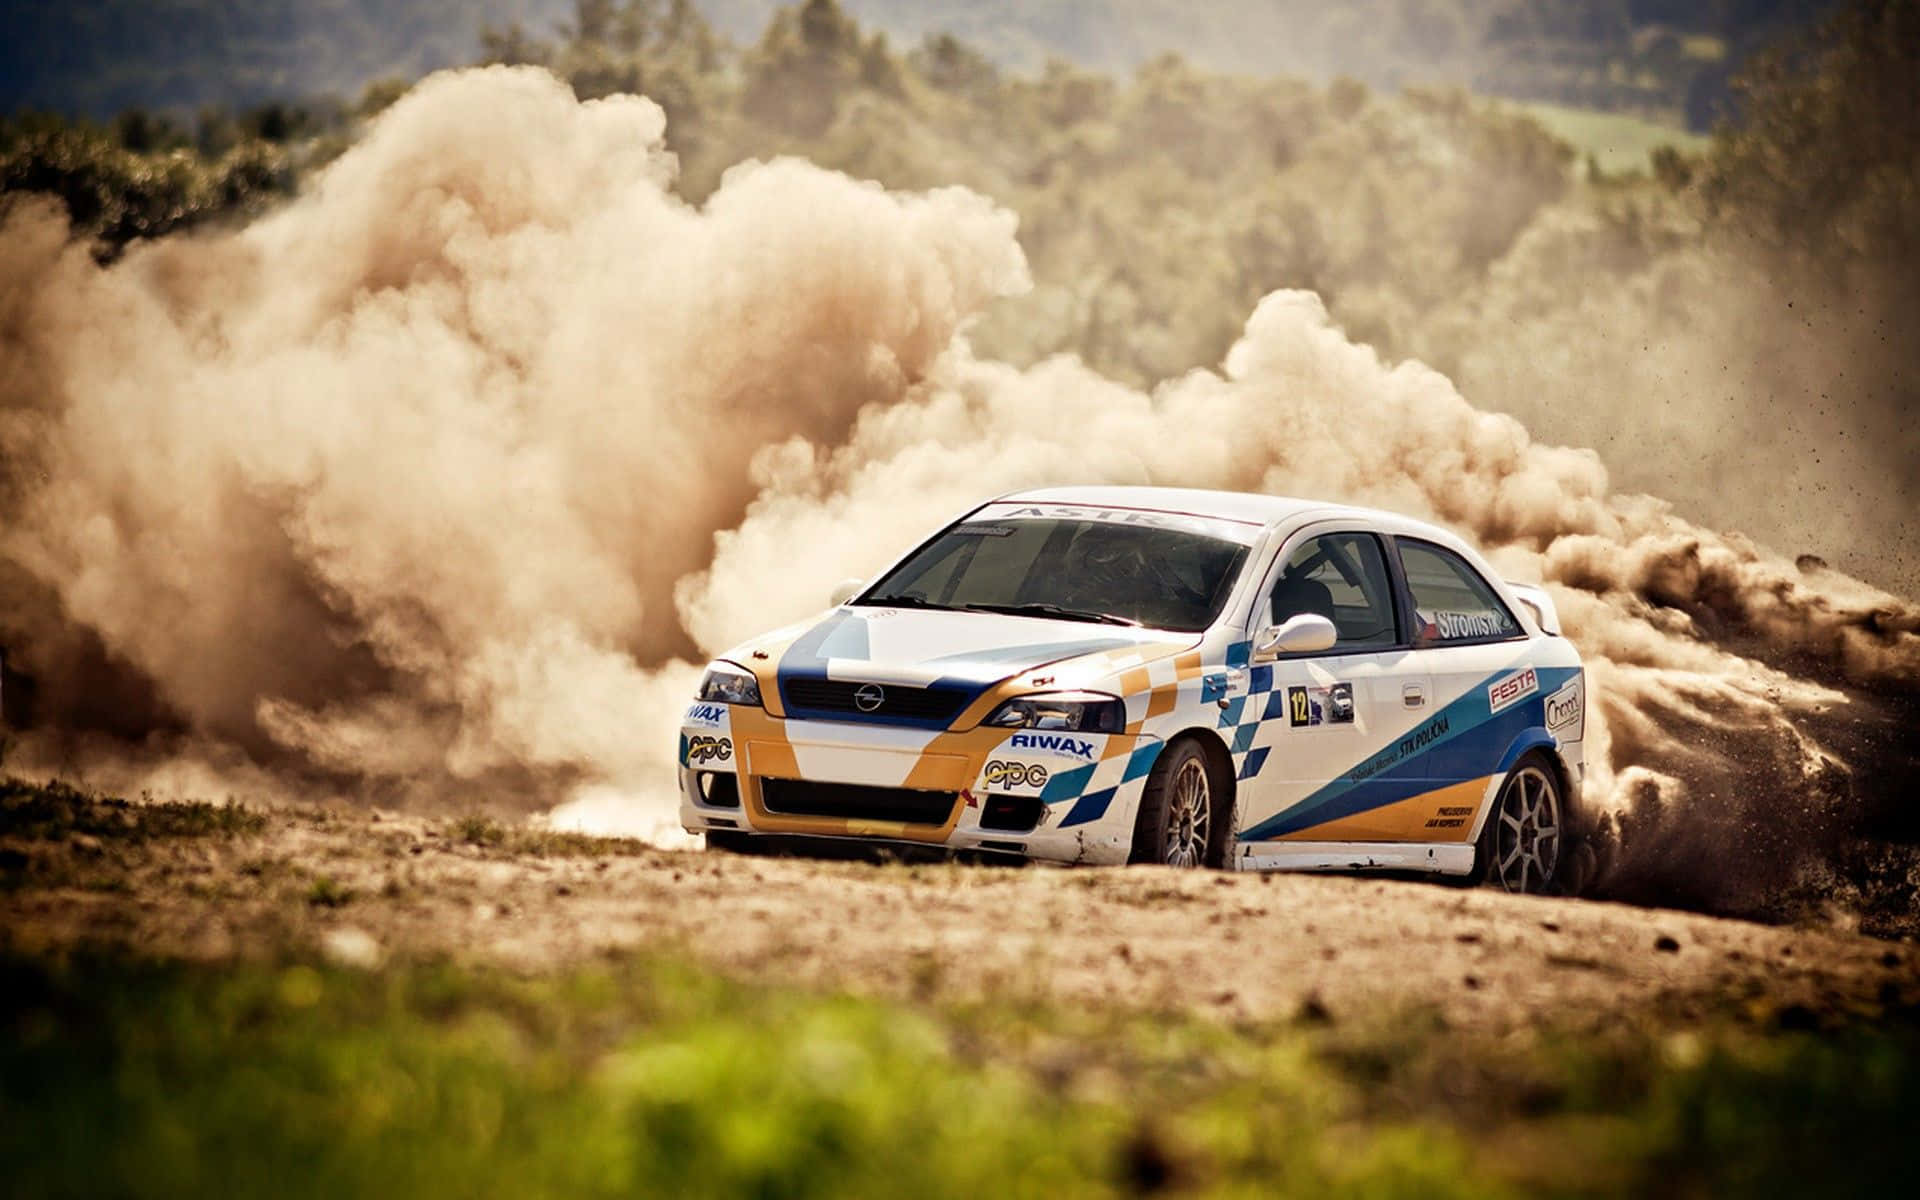 A Rally Car Driving Through A Dusty Field